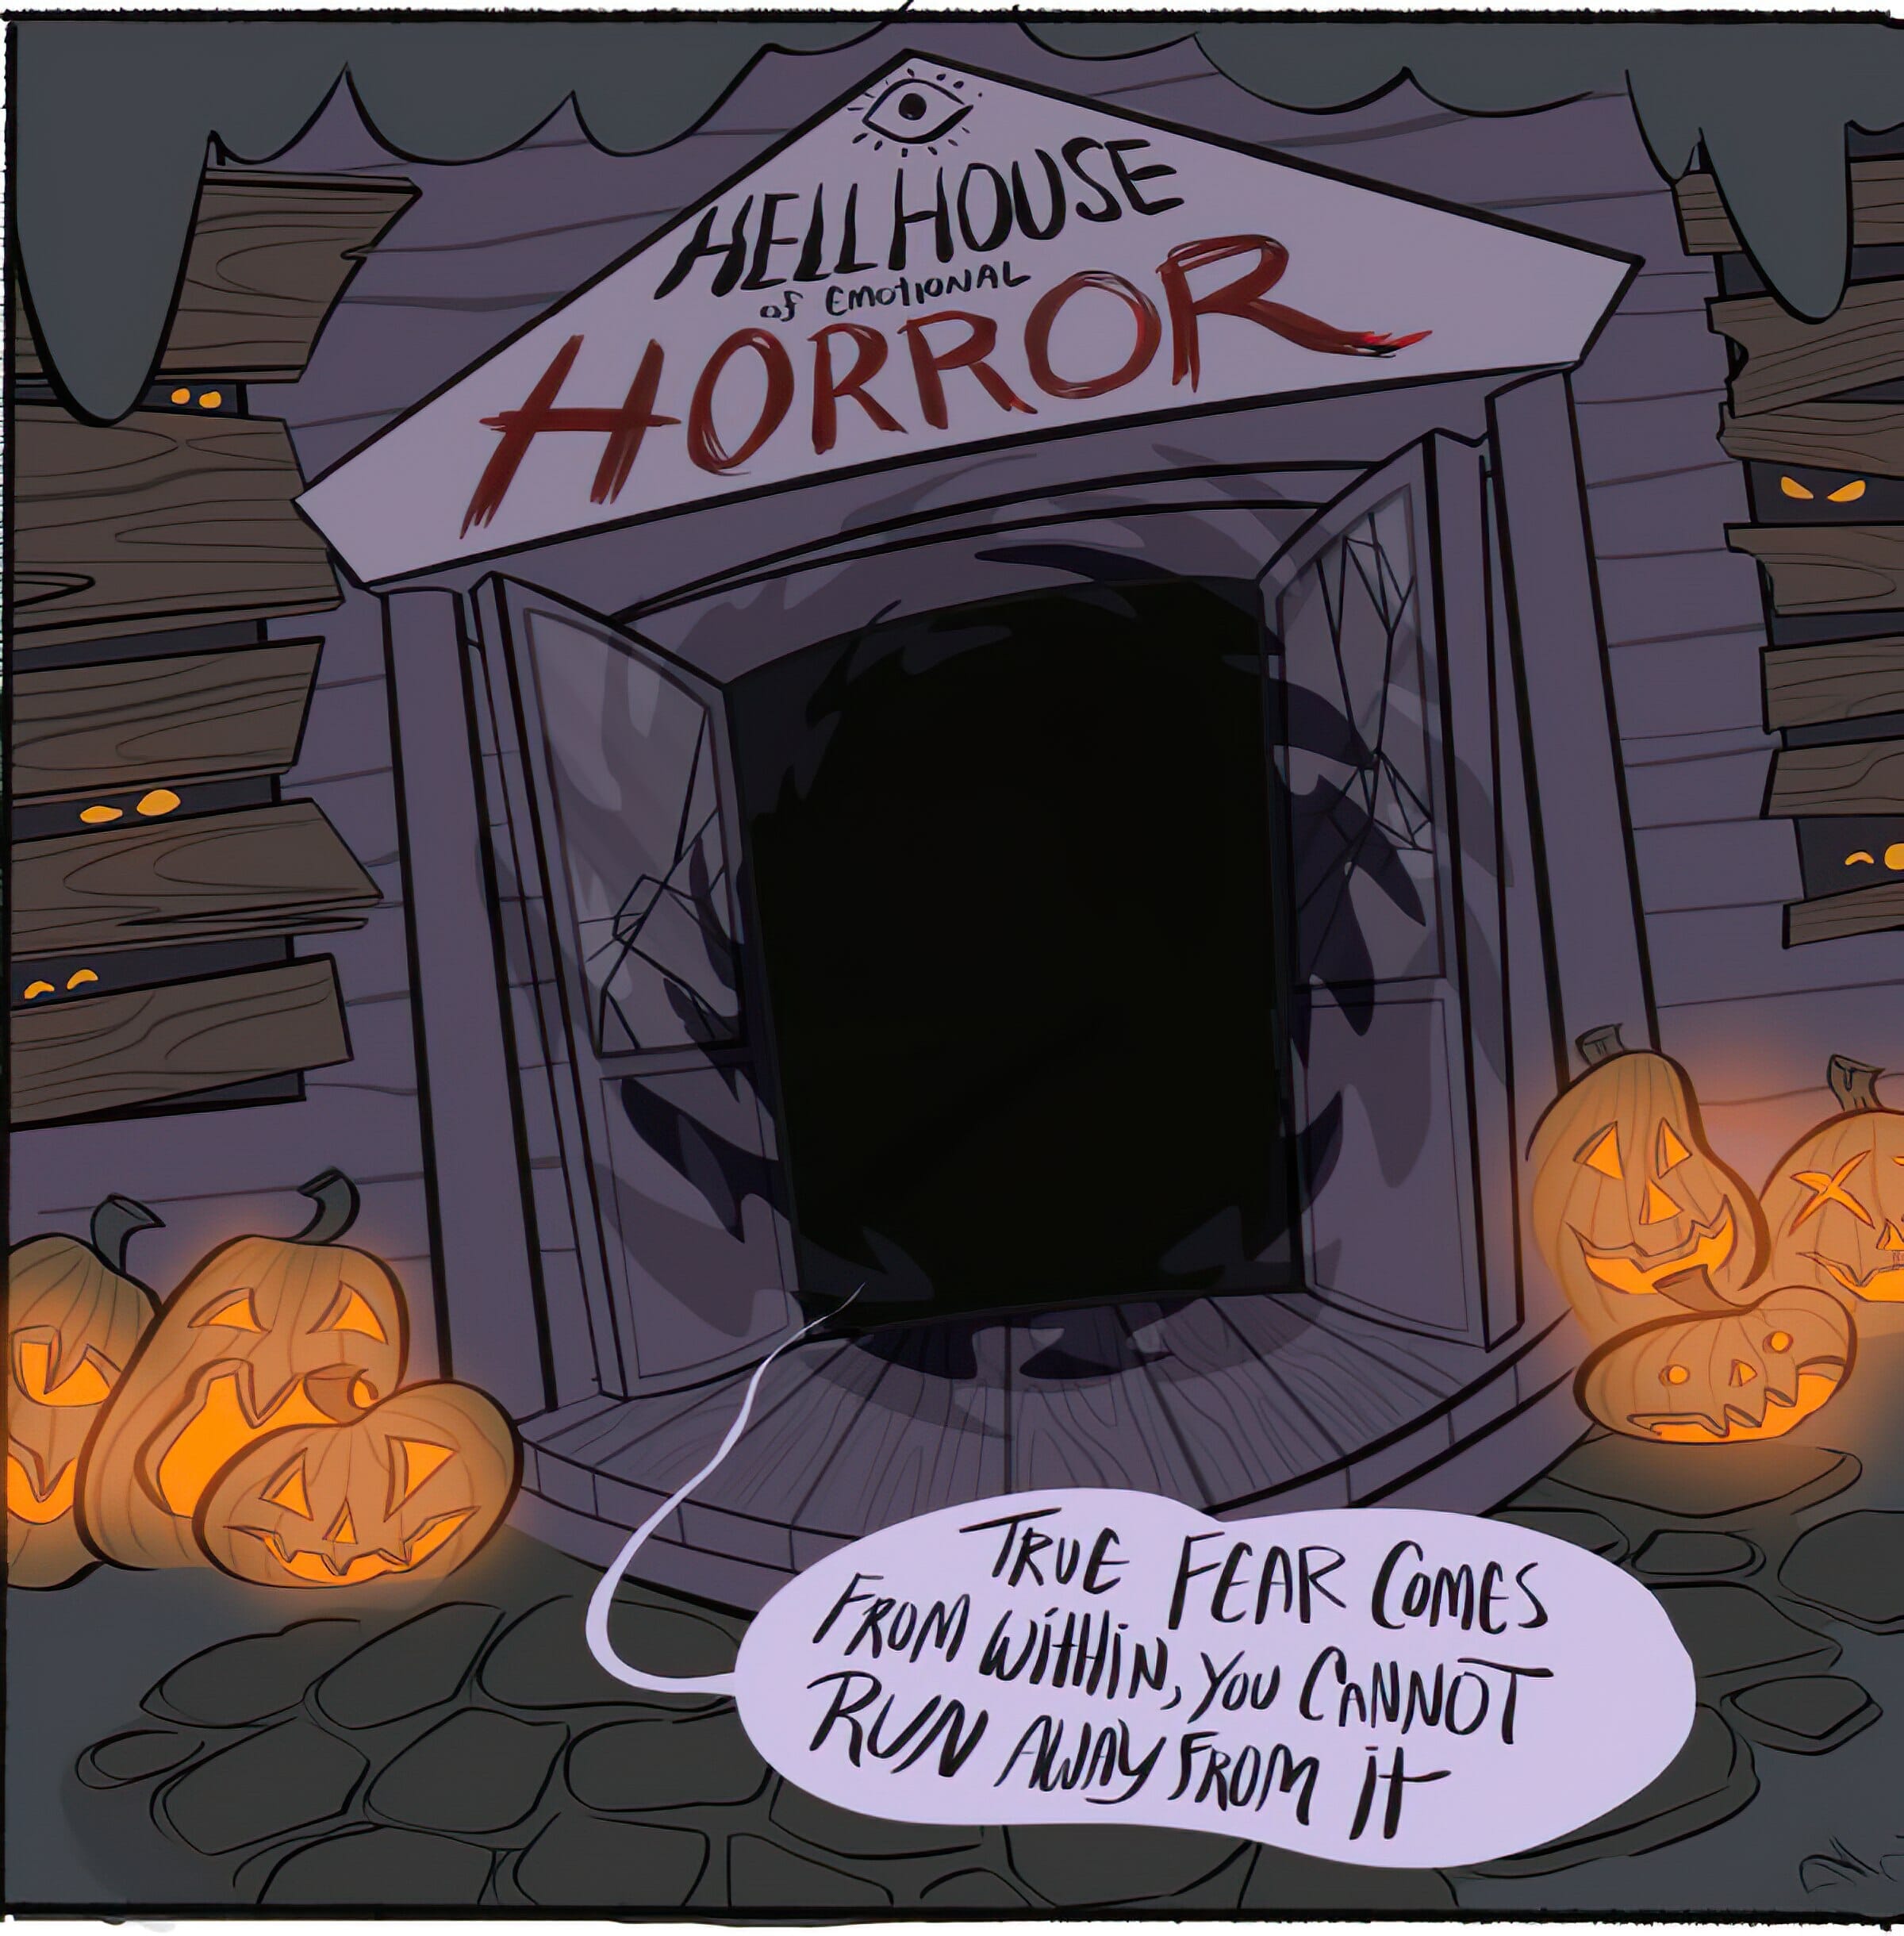 Hellhouse of Emotional Horror